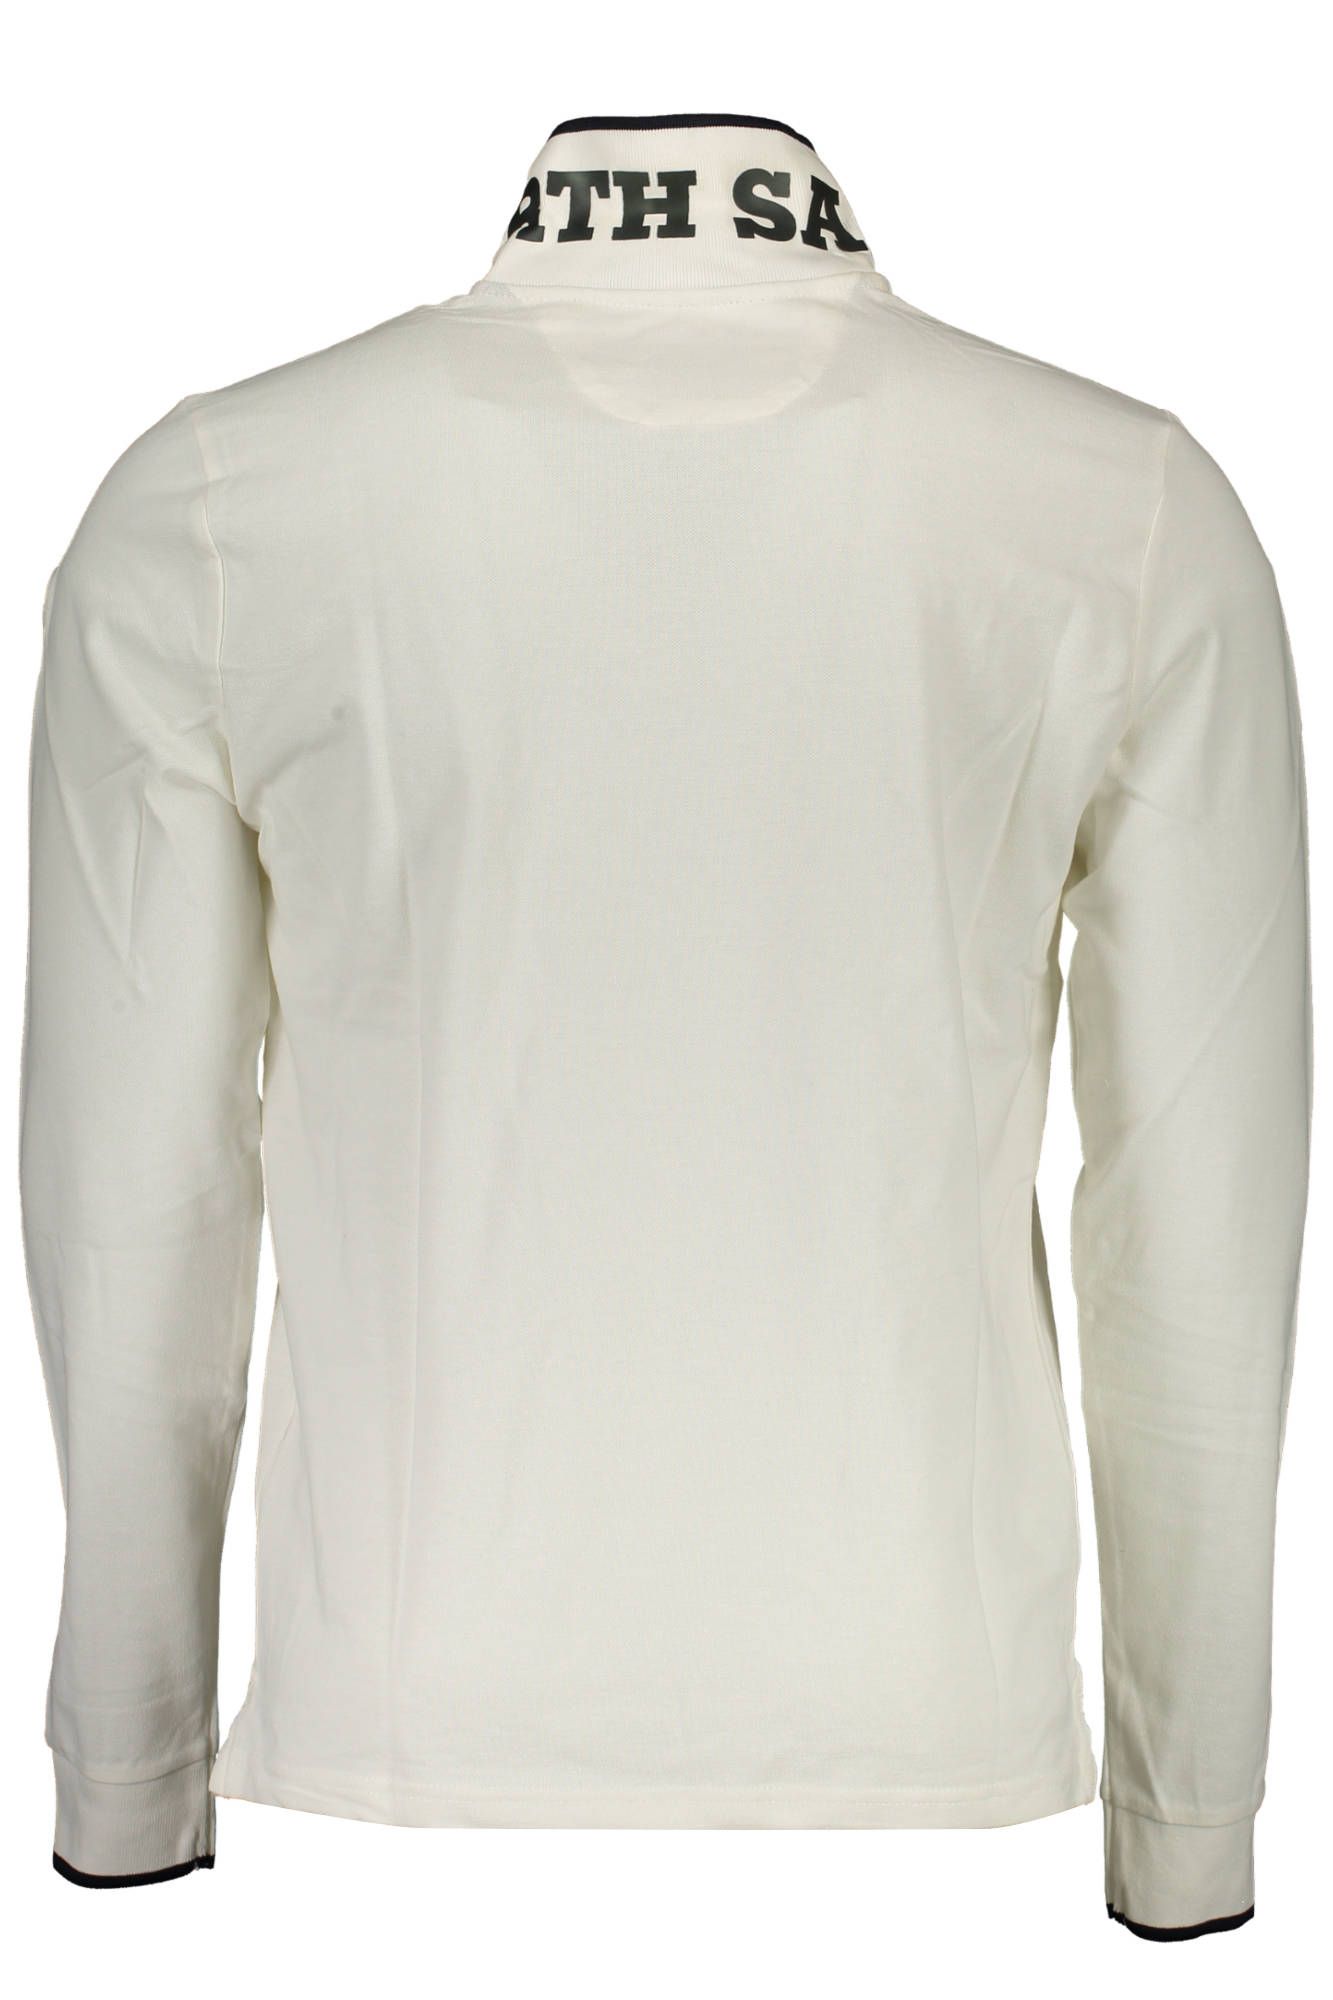 North Sails White Cotton Polo Shirt